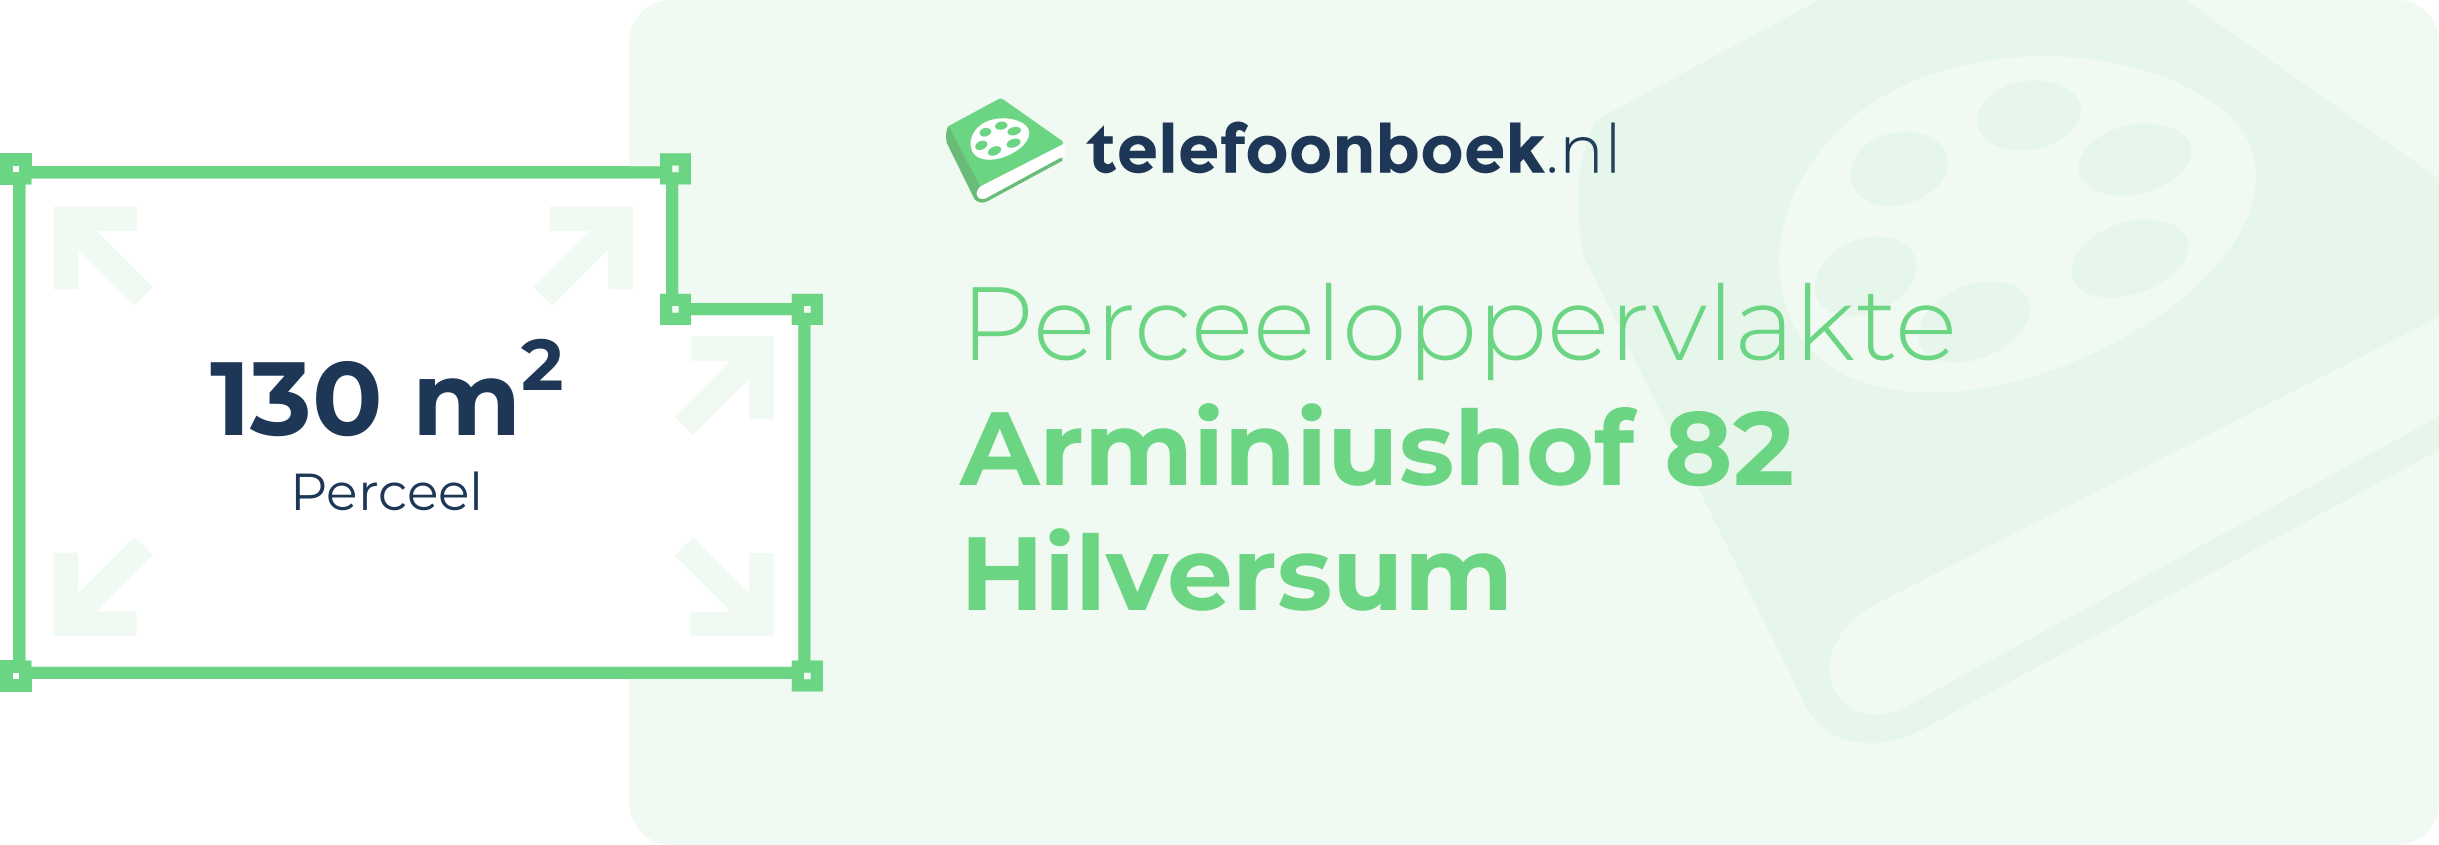 Perceeloppervlakte Arminiushof 82 Hilversum